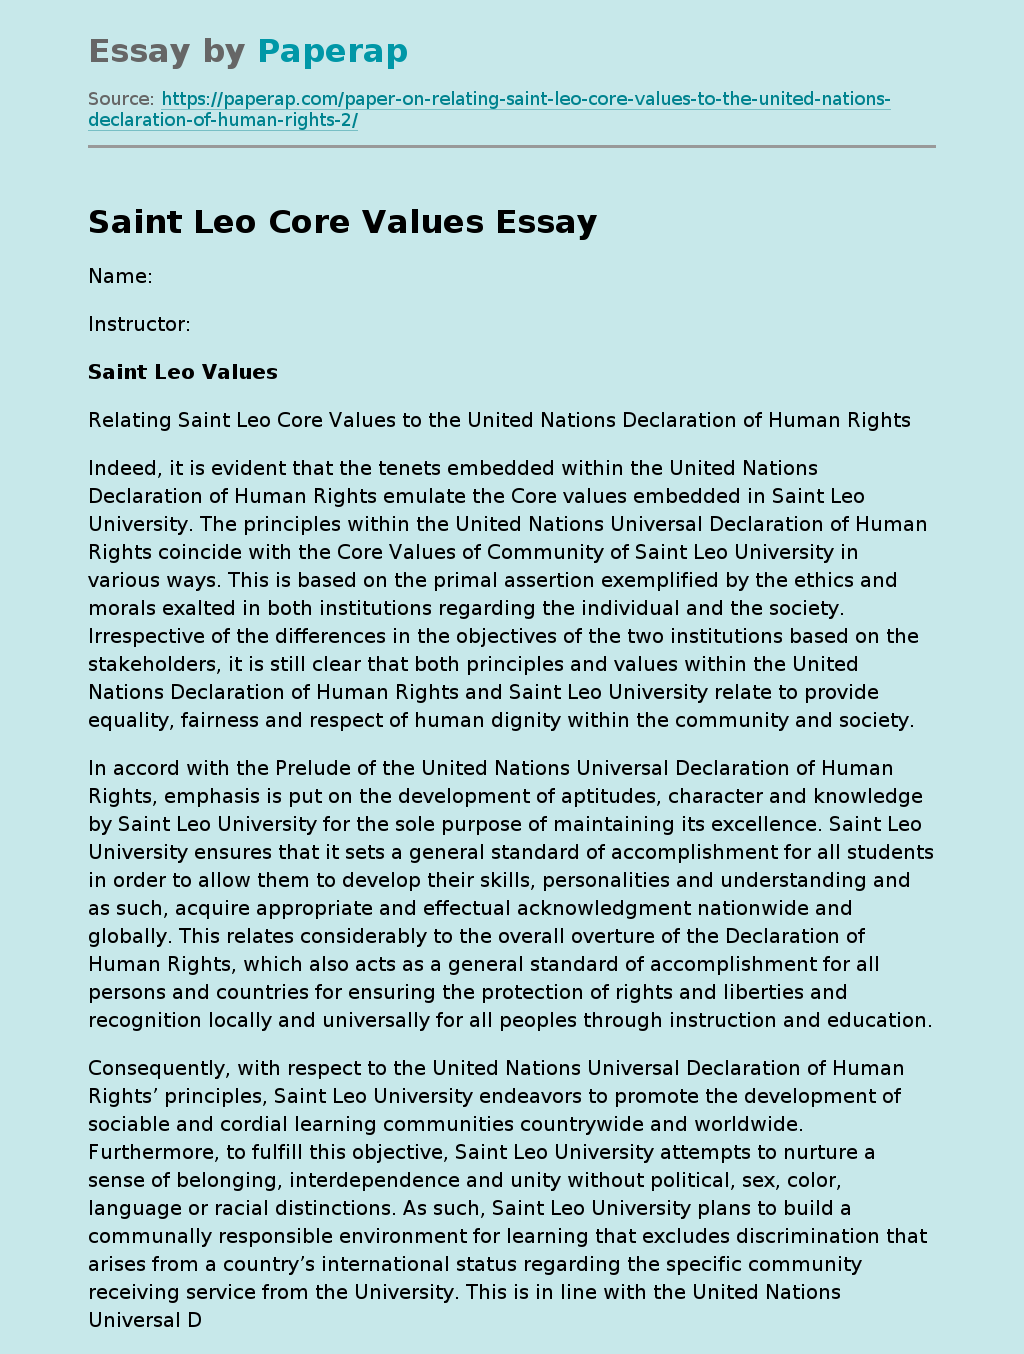 Saint Leo Core Values